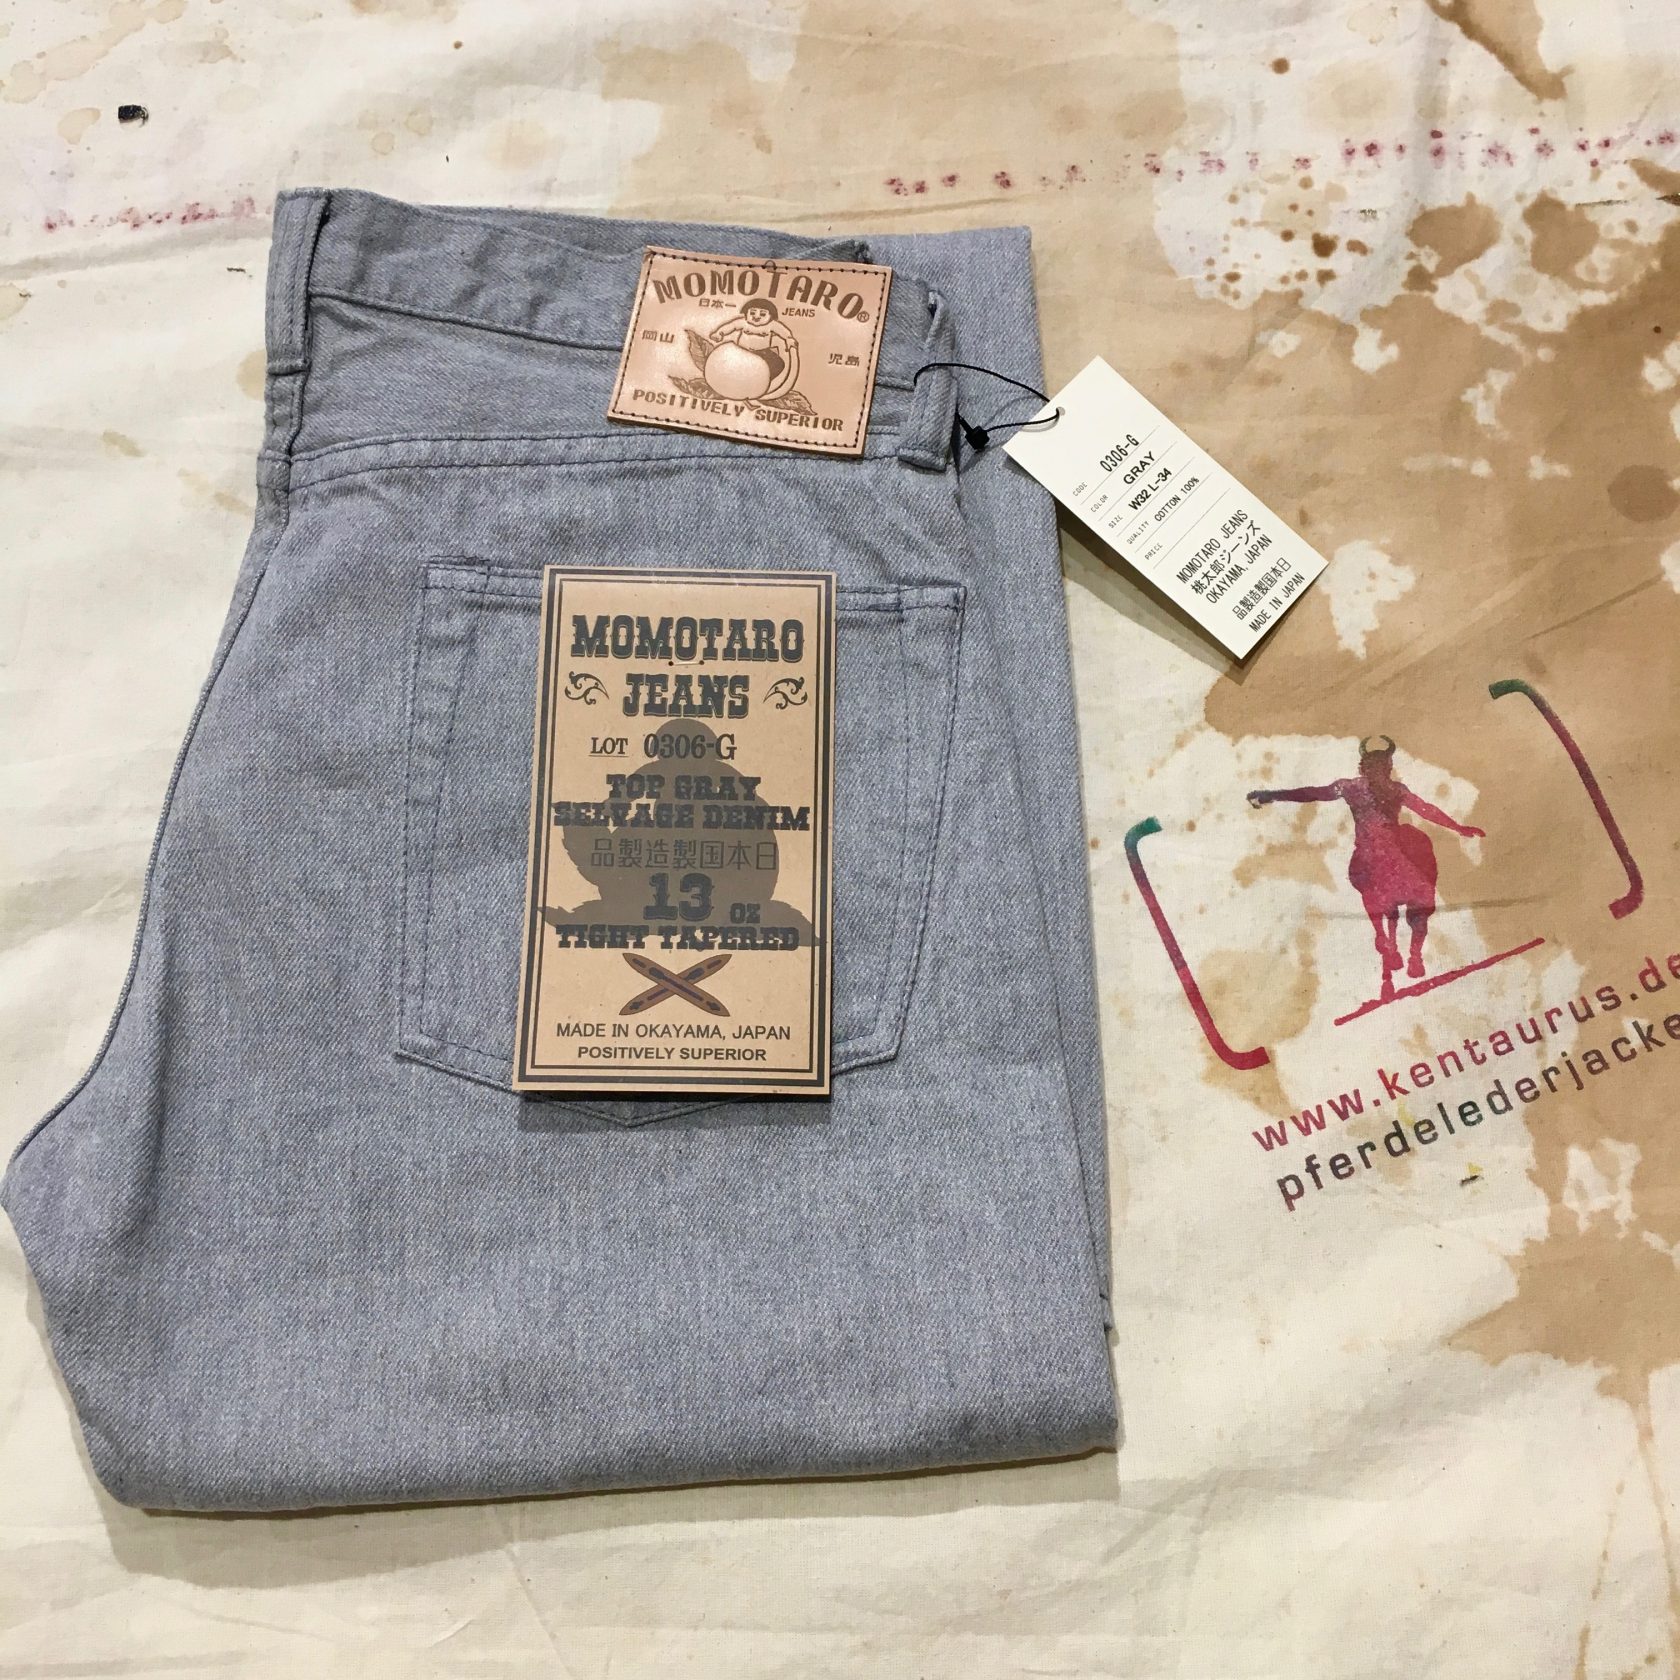 Momotaro grey selvedge jeans